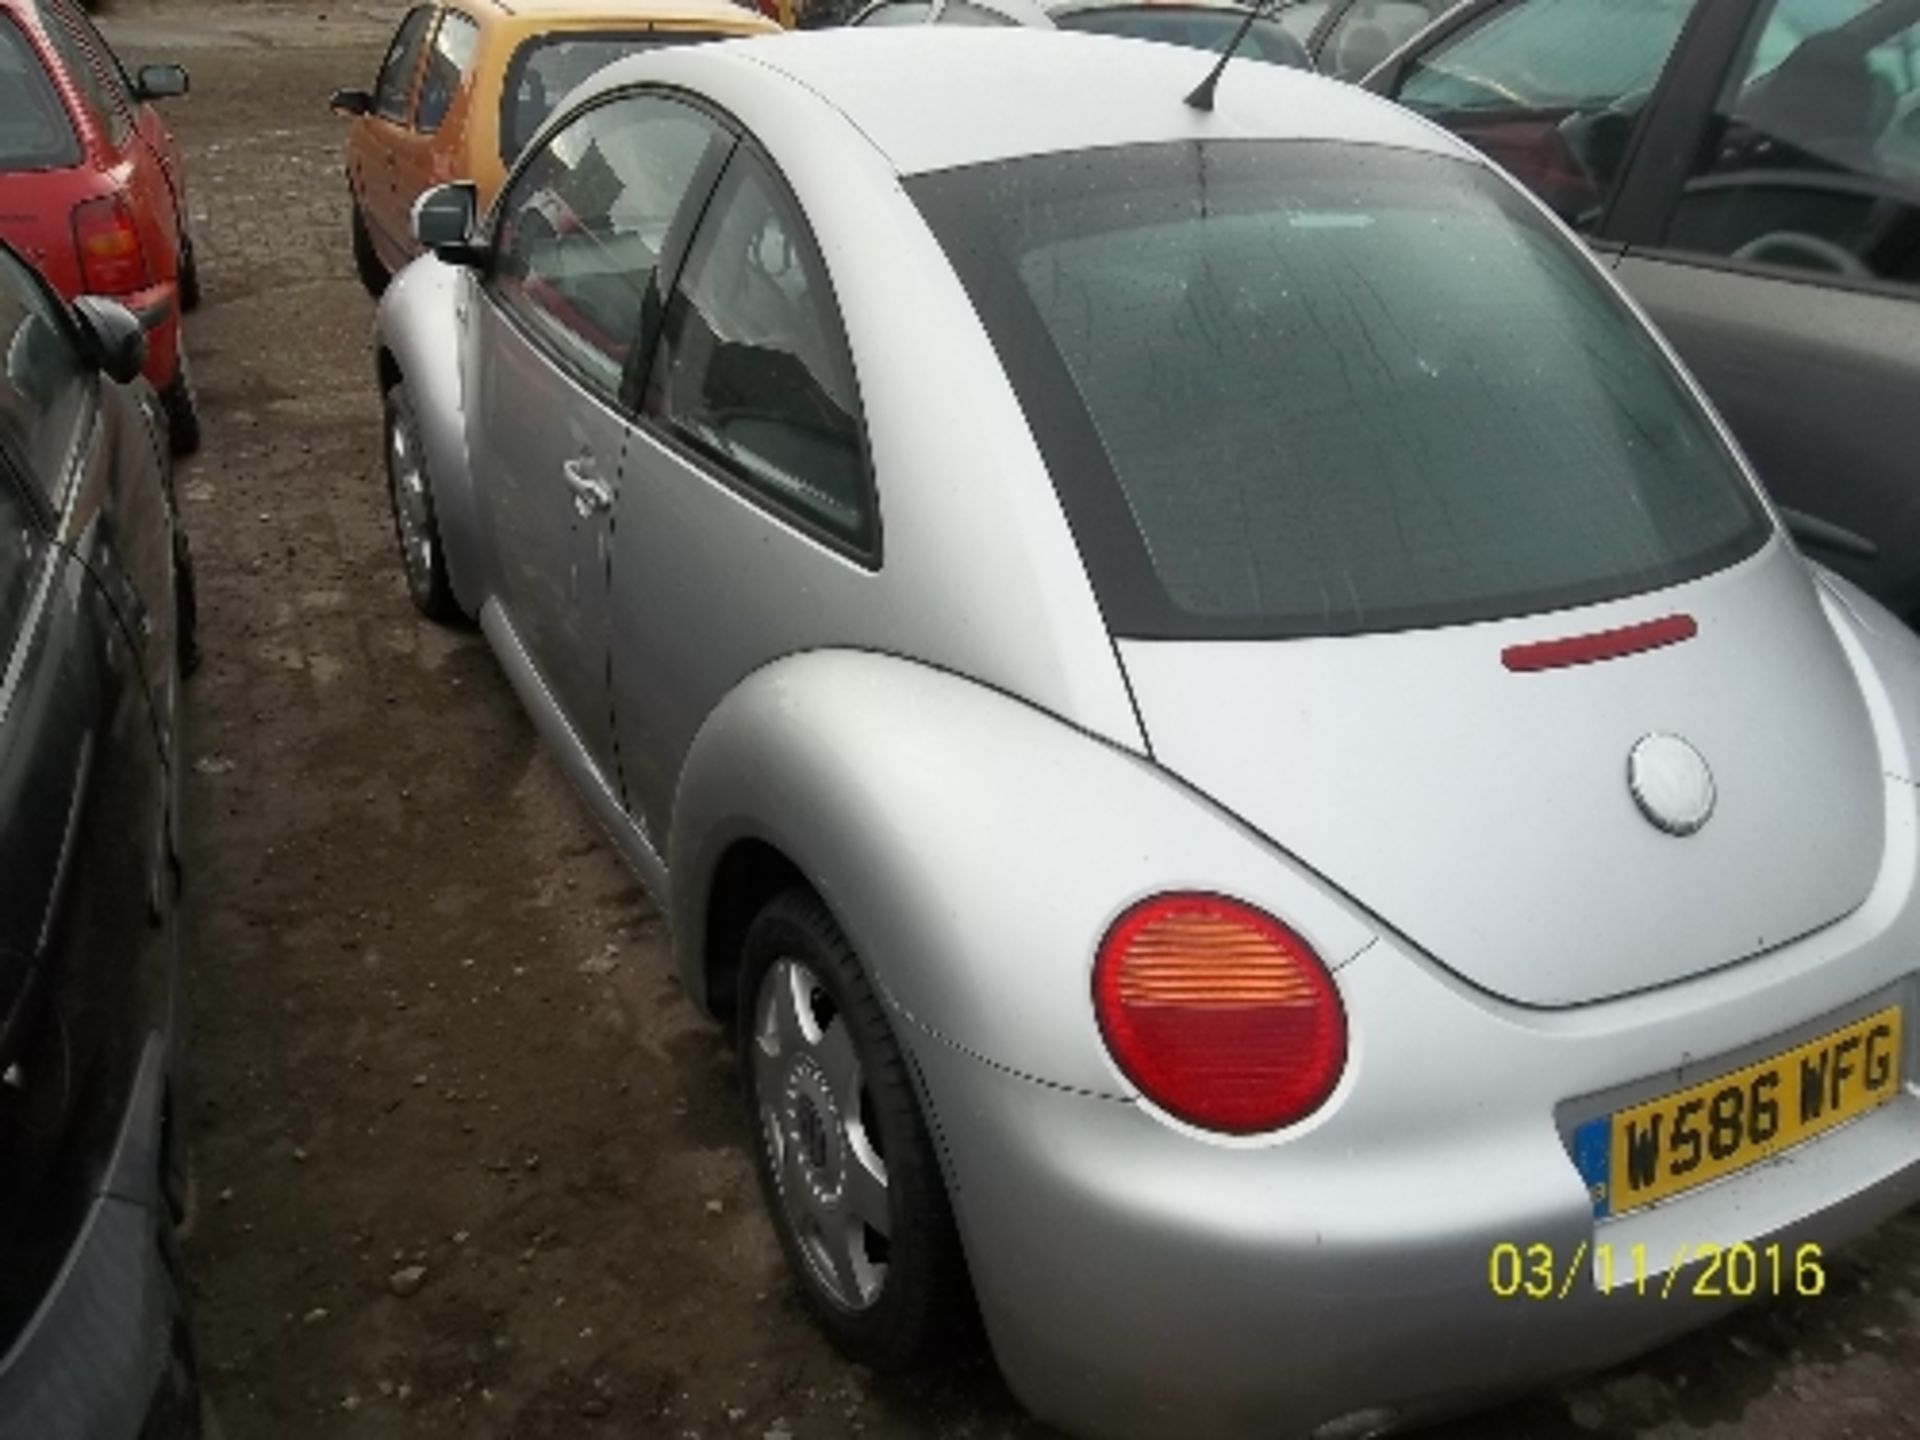 Volkswagen Beetle - W586 WFGDate of registration: 09.05.20001984 cc, petrol, silverOdometer - Image 4 of 4